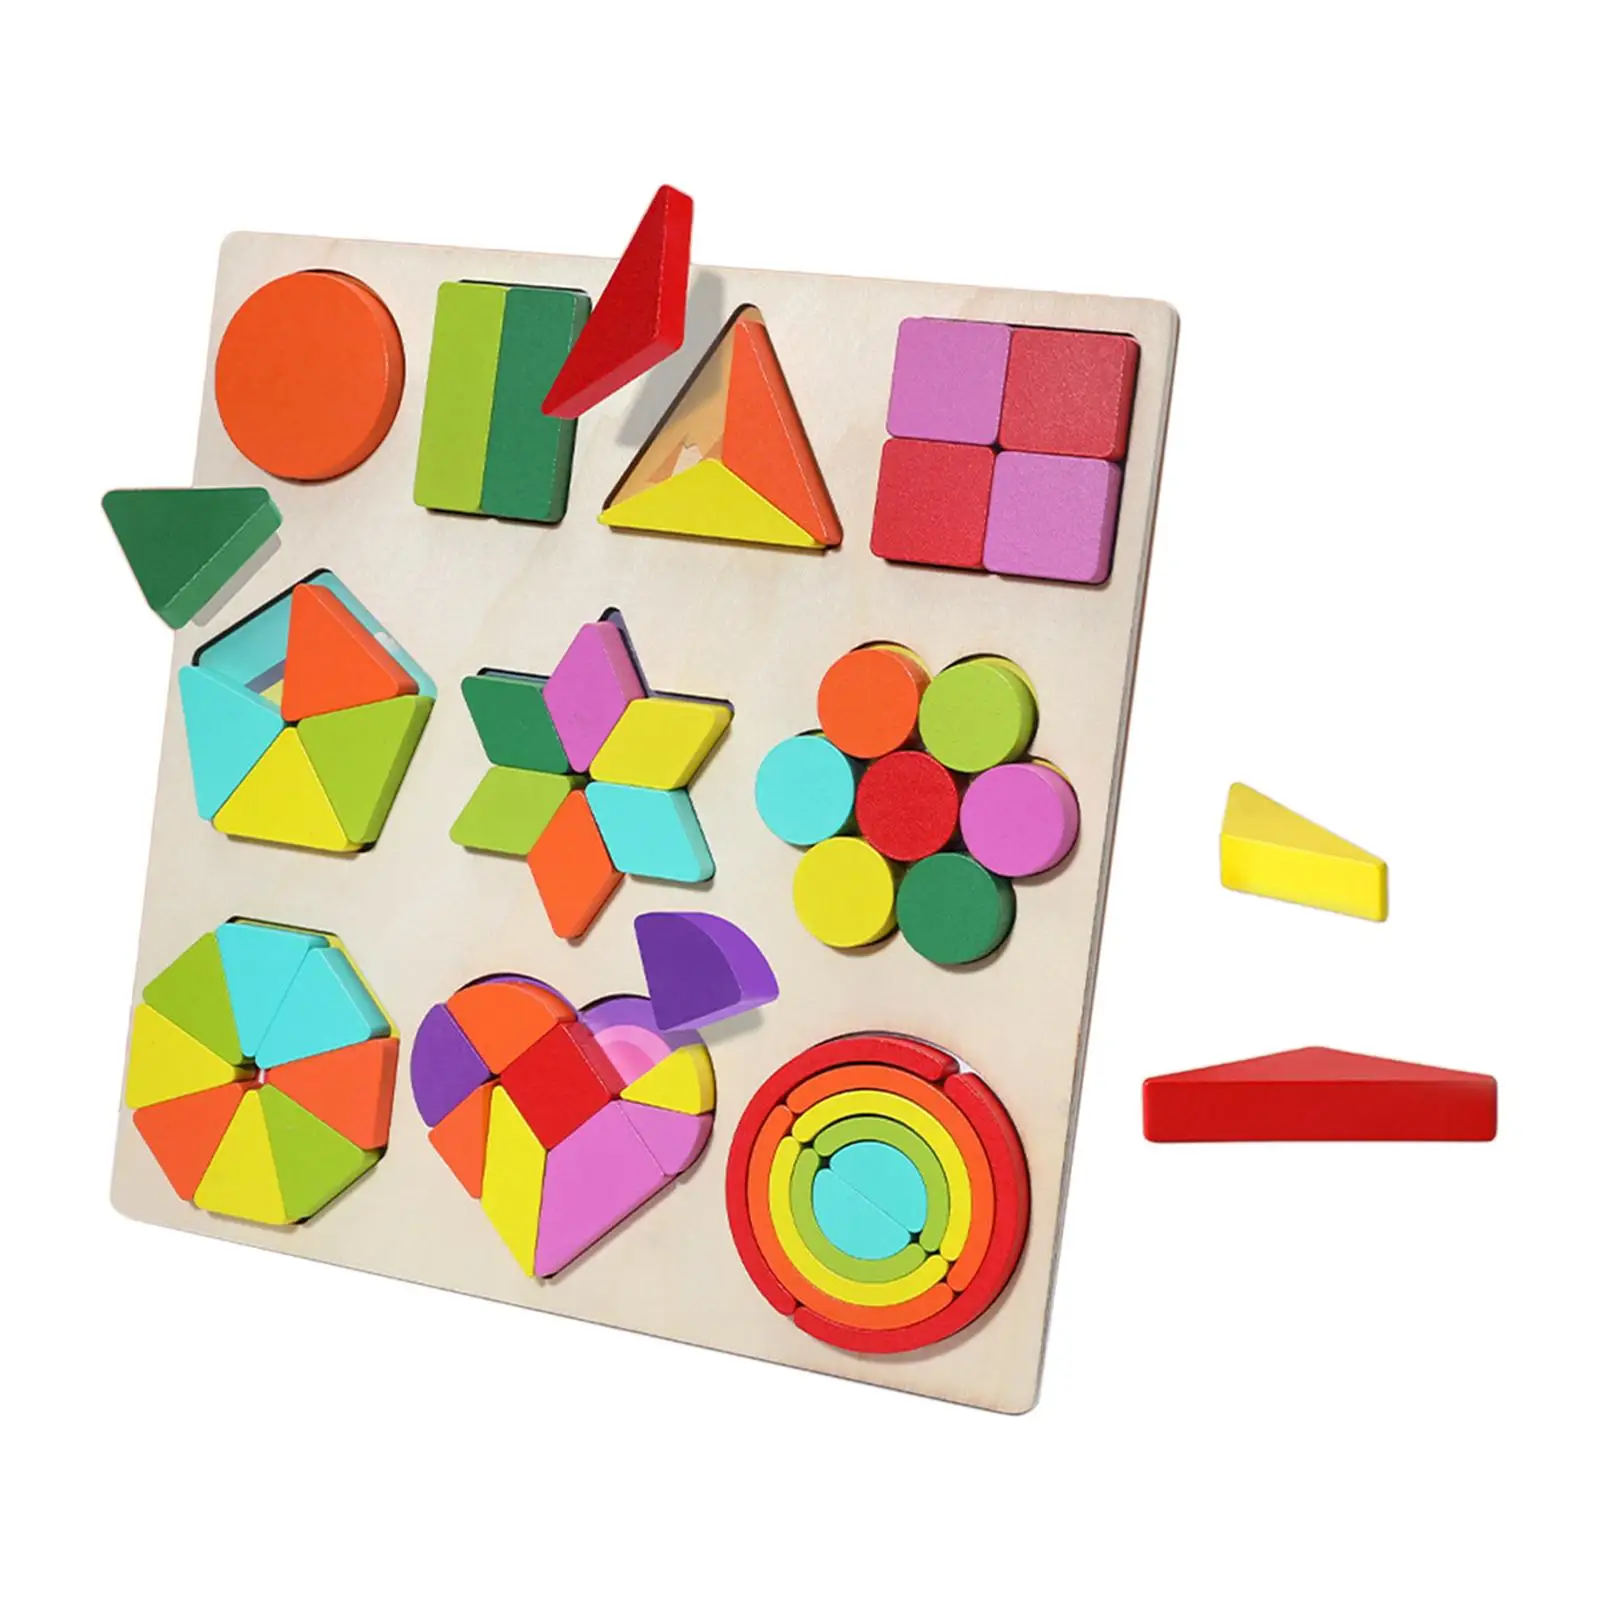 Wooden Wooden Puzzle Educational Developmental Toys Logical Skills Geometric Manipulative Board Game  Jigsaw Girls